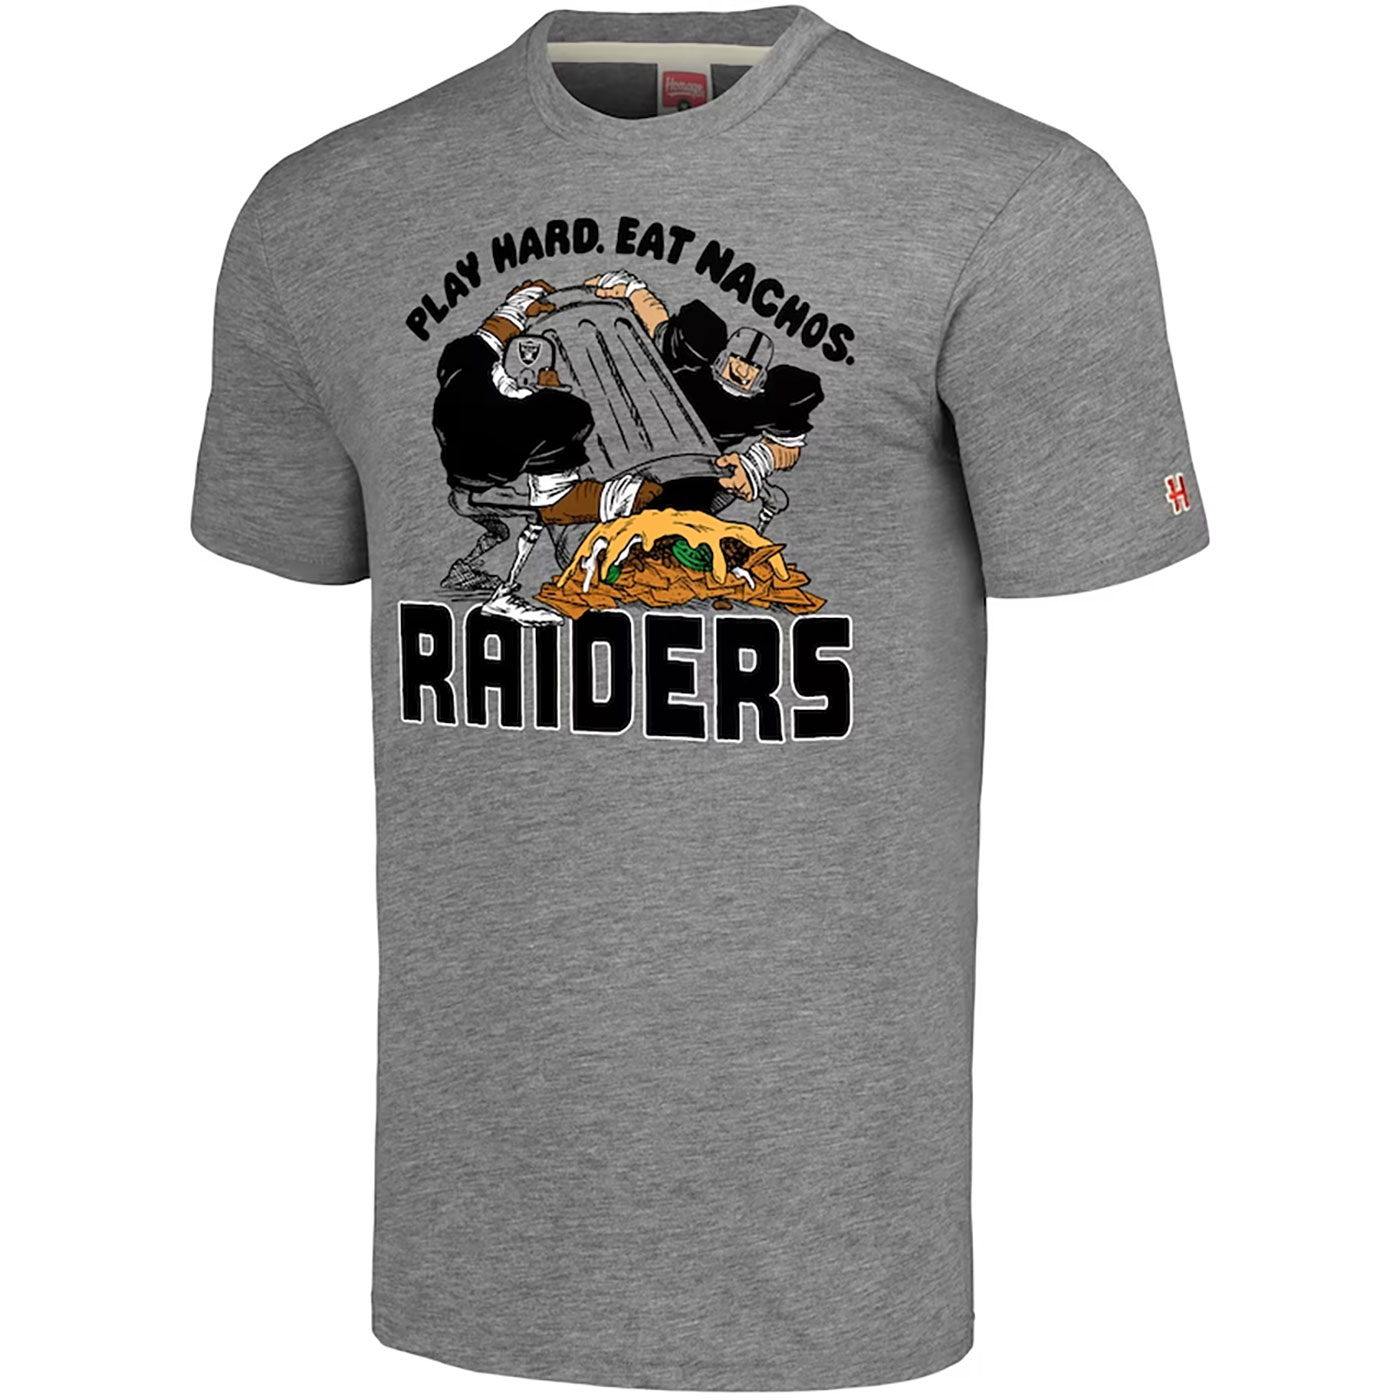 Raiders debut Orange Shirt Day jersey - MBC Radio